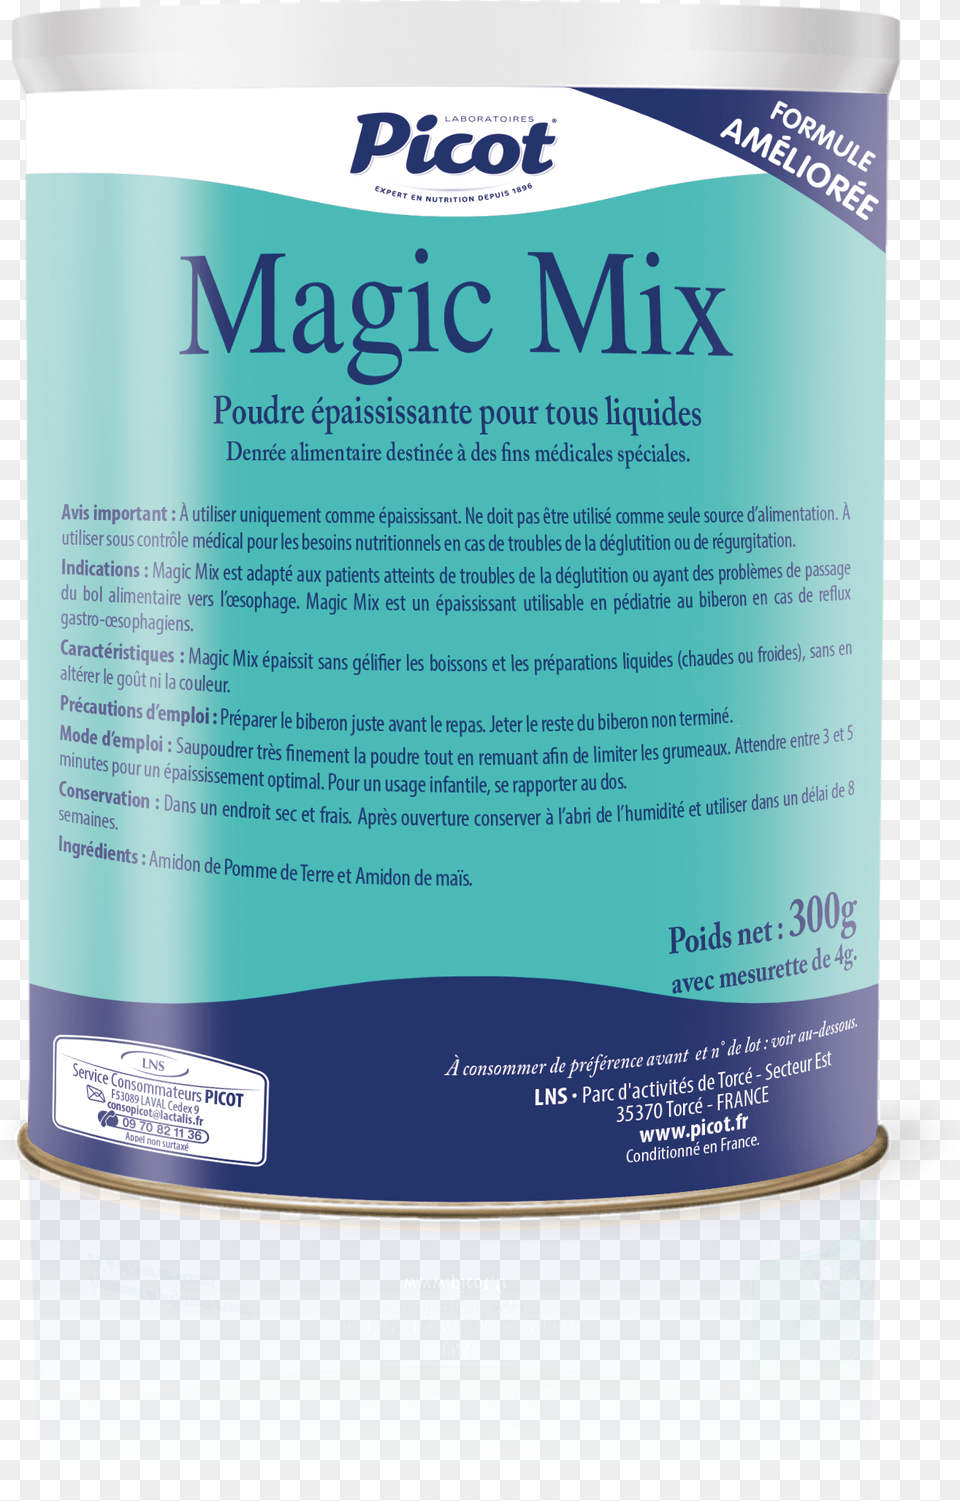 Magic Mix Picot, Advertisement, Poster, Can, Tin Png Image